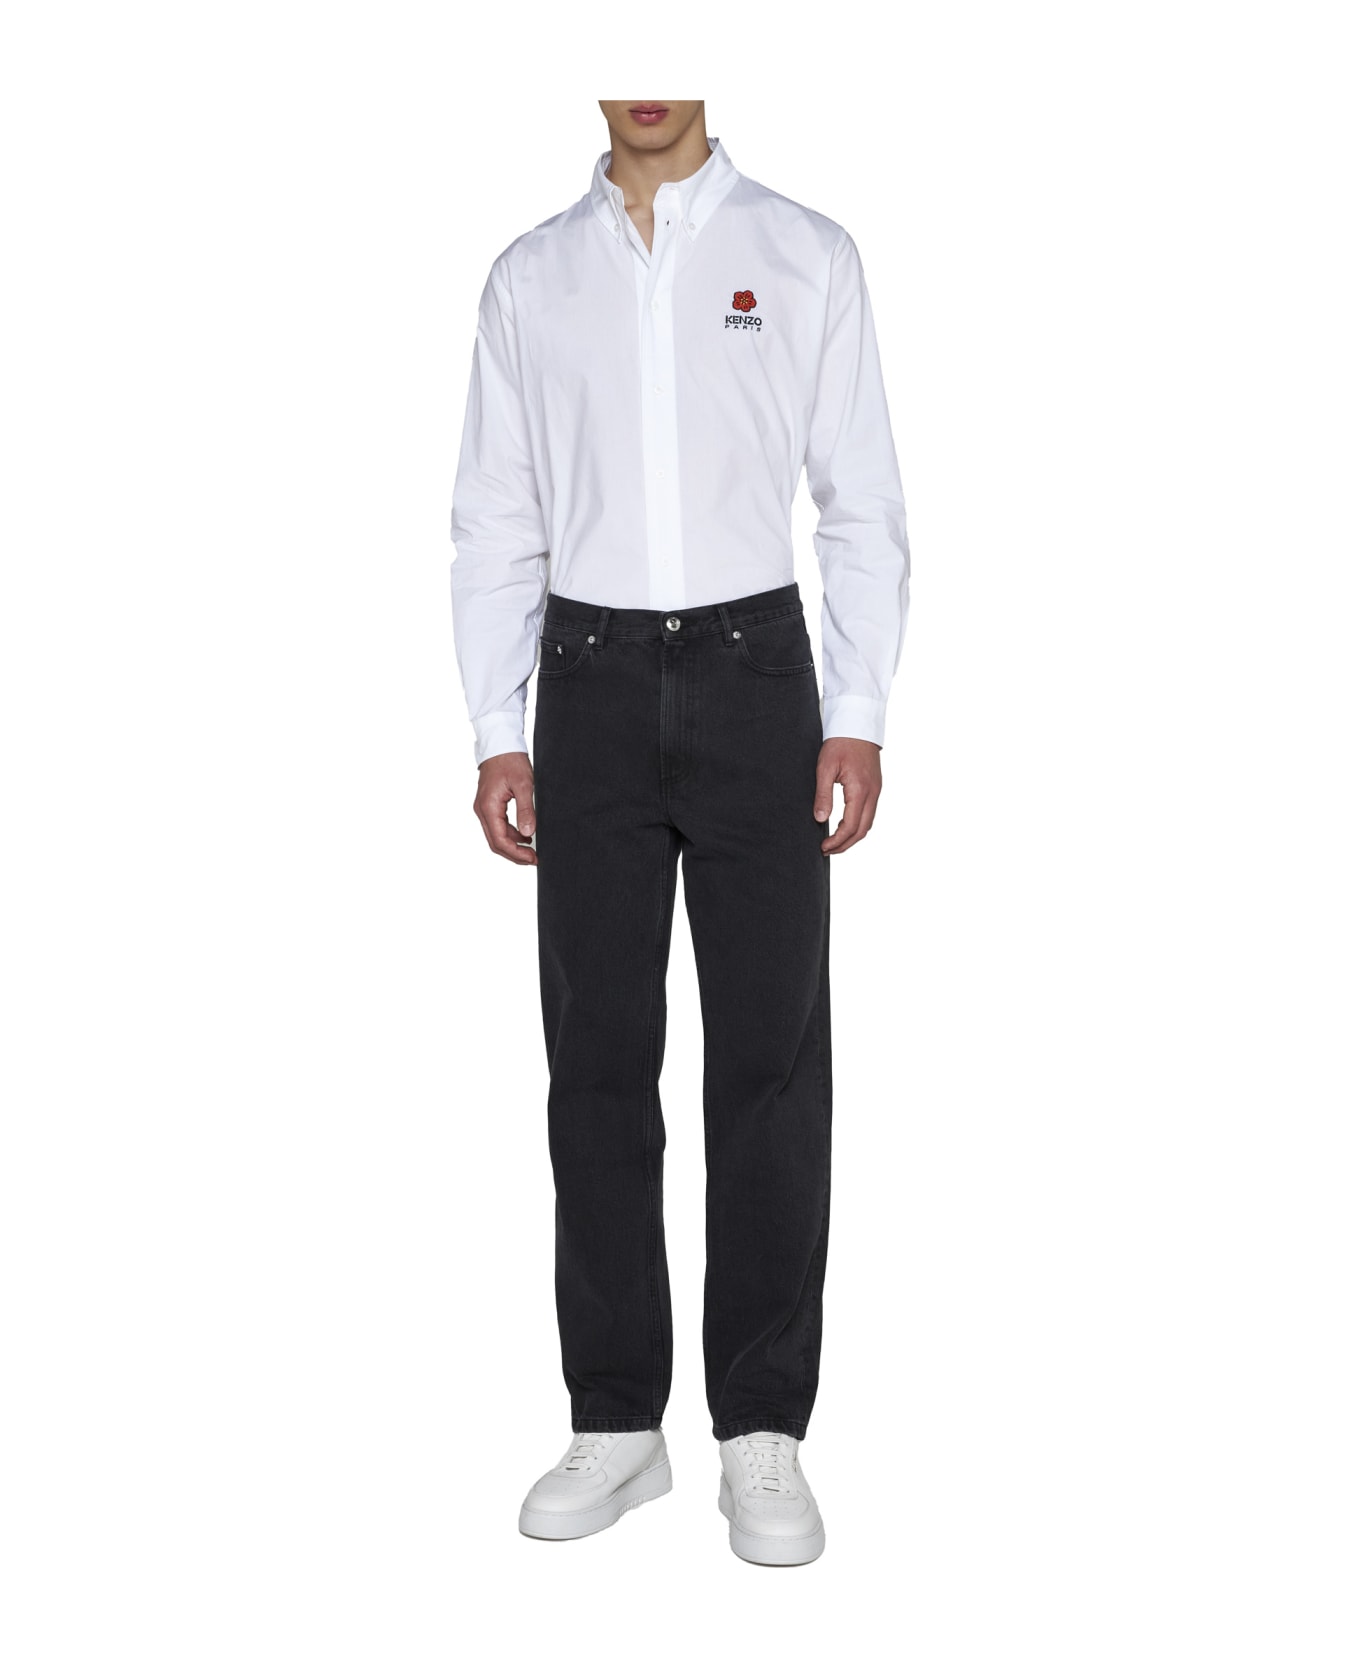 Kenzo Button-down Collar Cotton Shirt - White シャツ